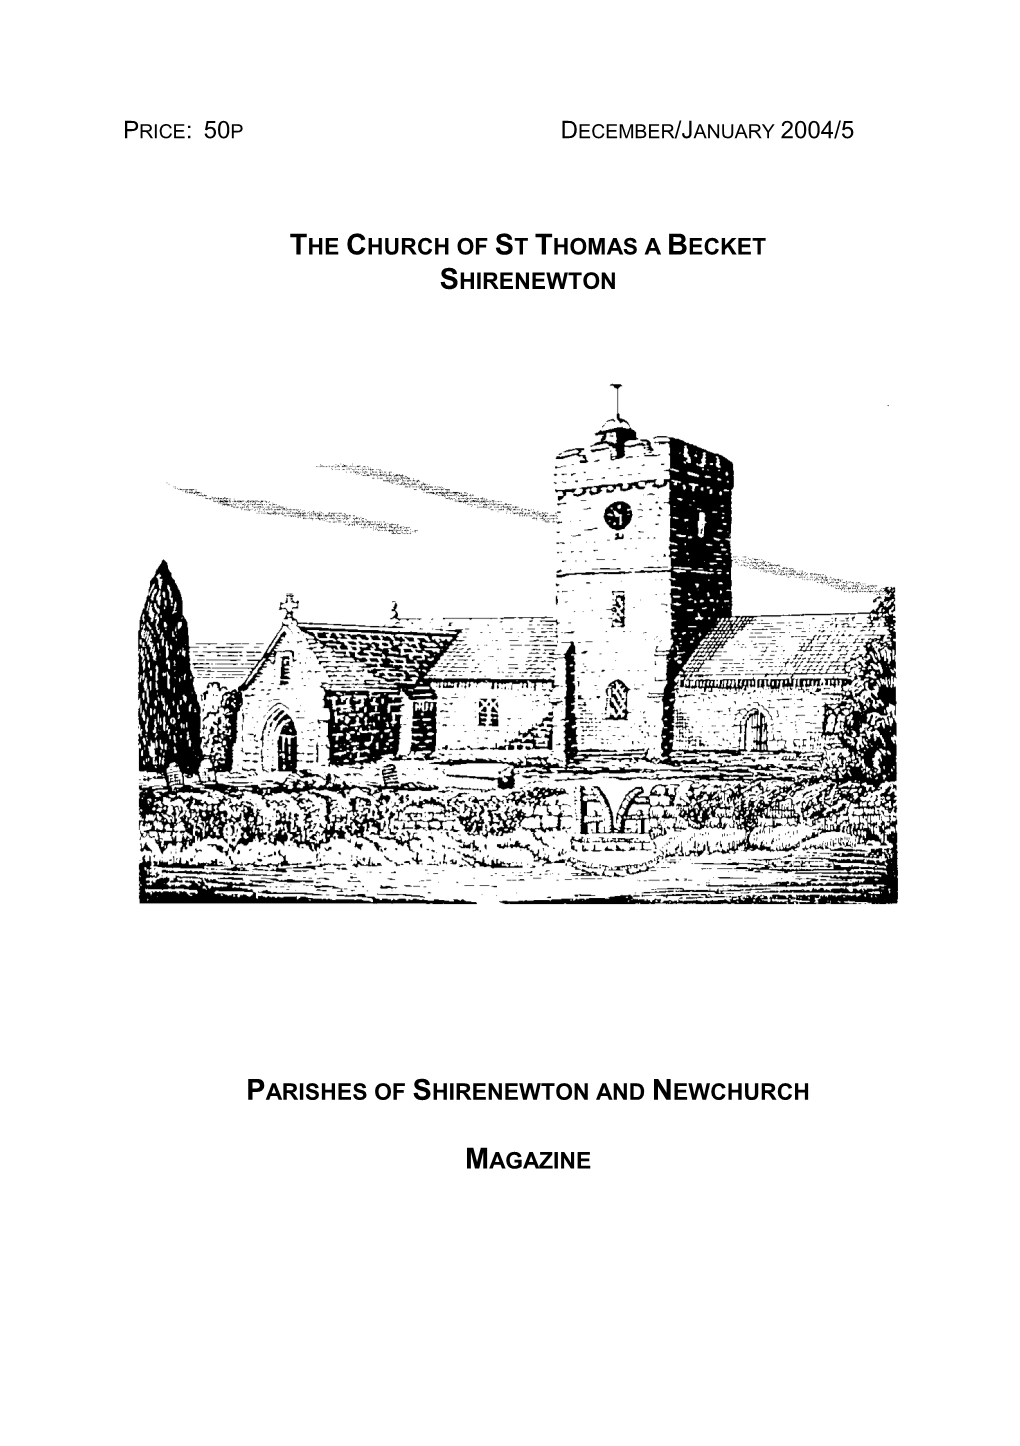 The Church of St Thomas a Becket Shirenewton